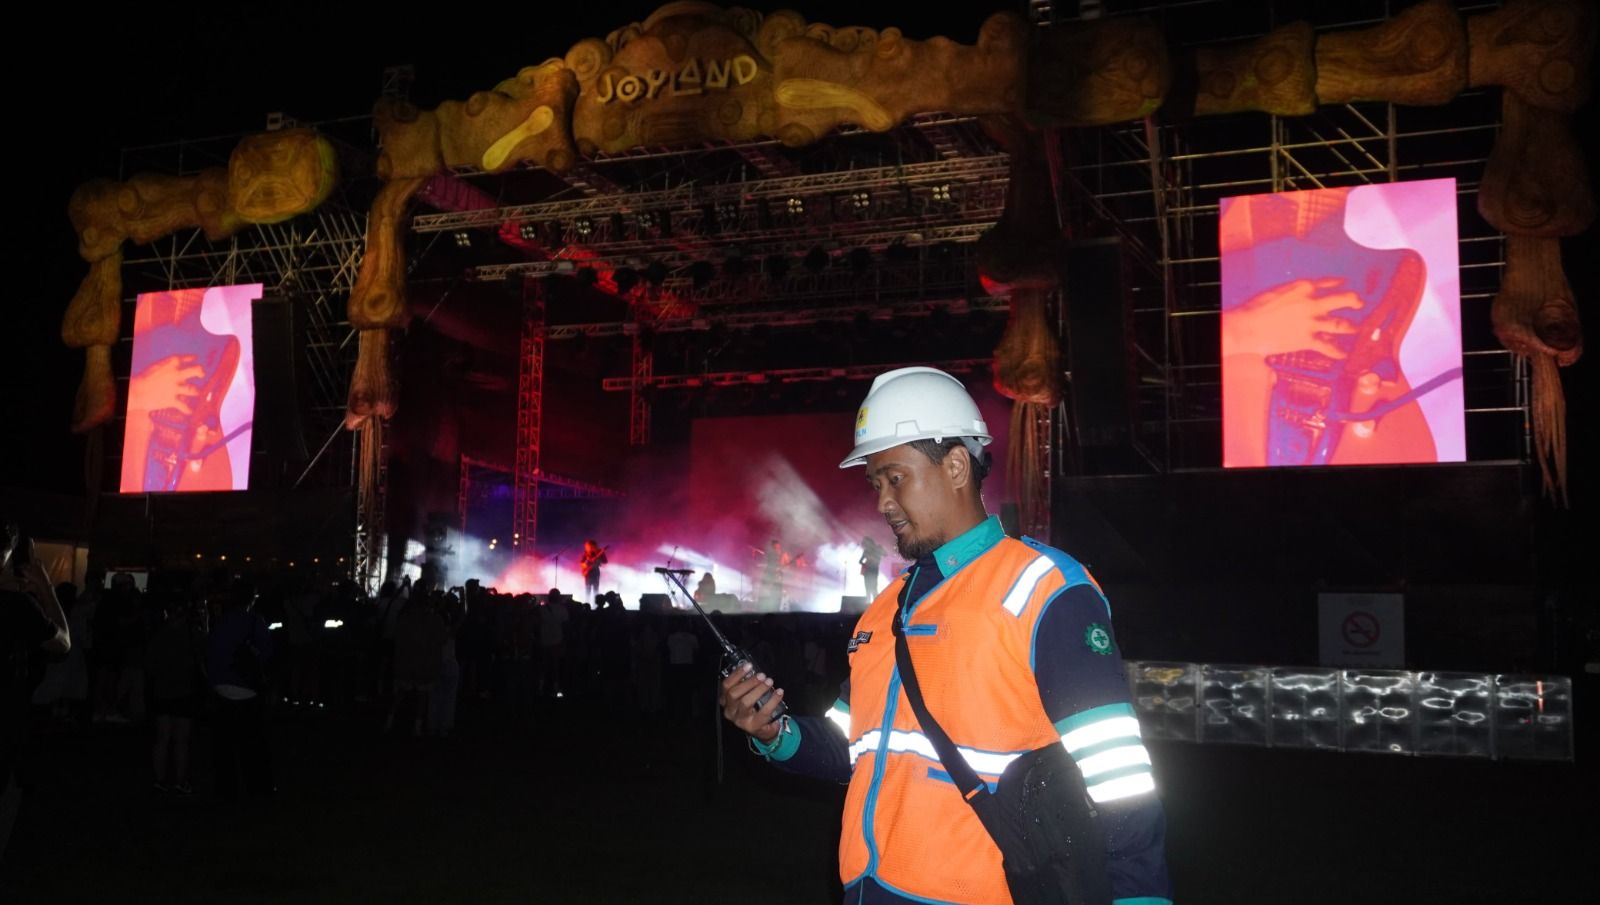 PT PLN (Persero) turut menyukseskan penyelenggaraan Festival Tahunan Joyland di Nusa Dua, Bali dengan menghadirkan listrik andal tanpa kedip.